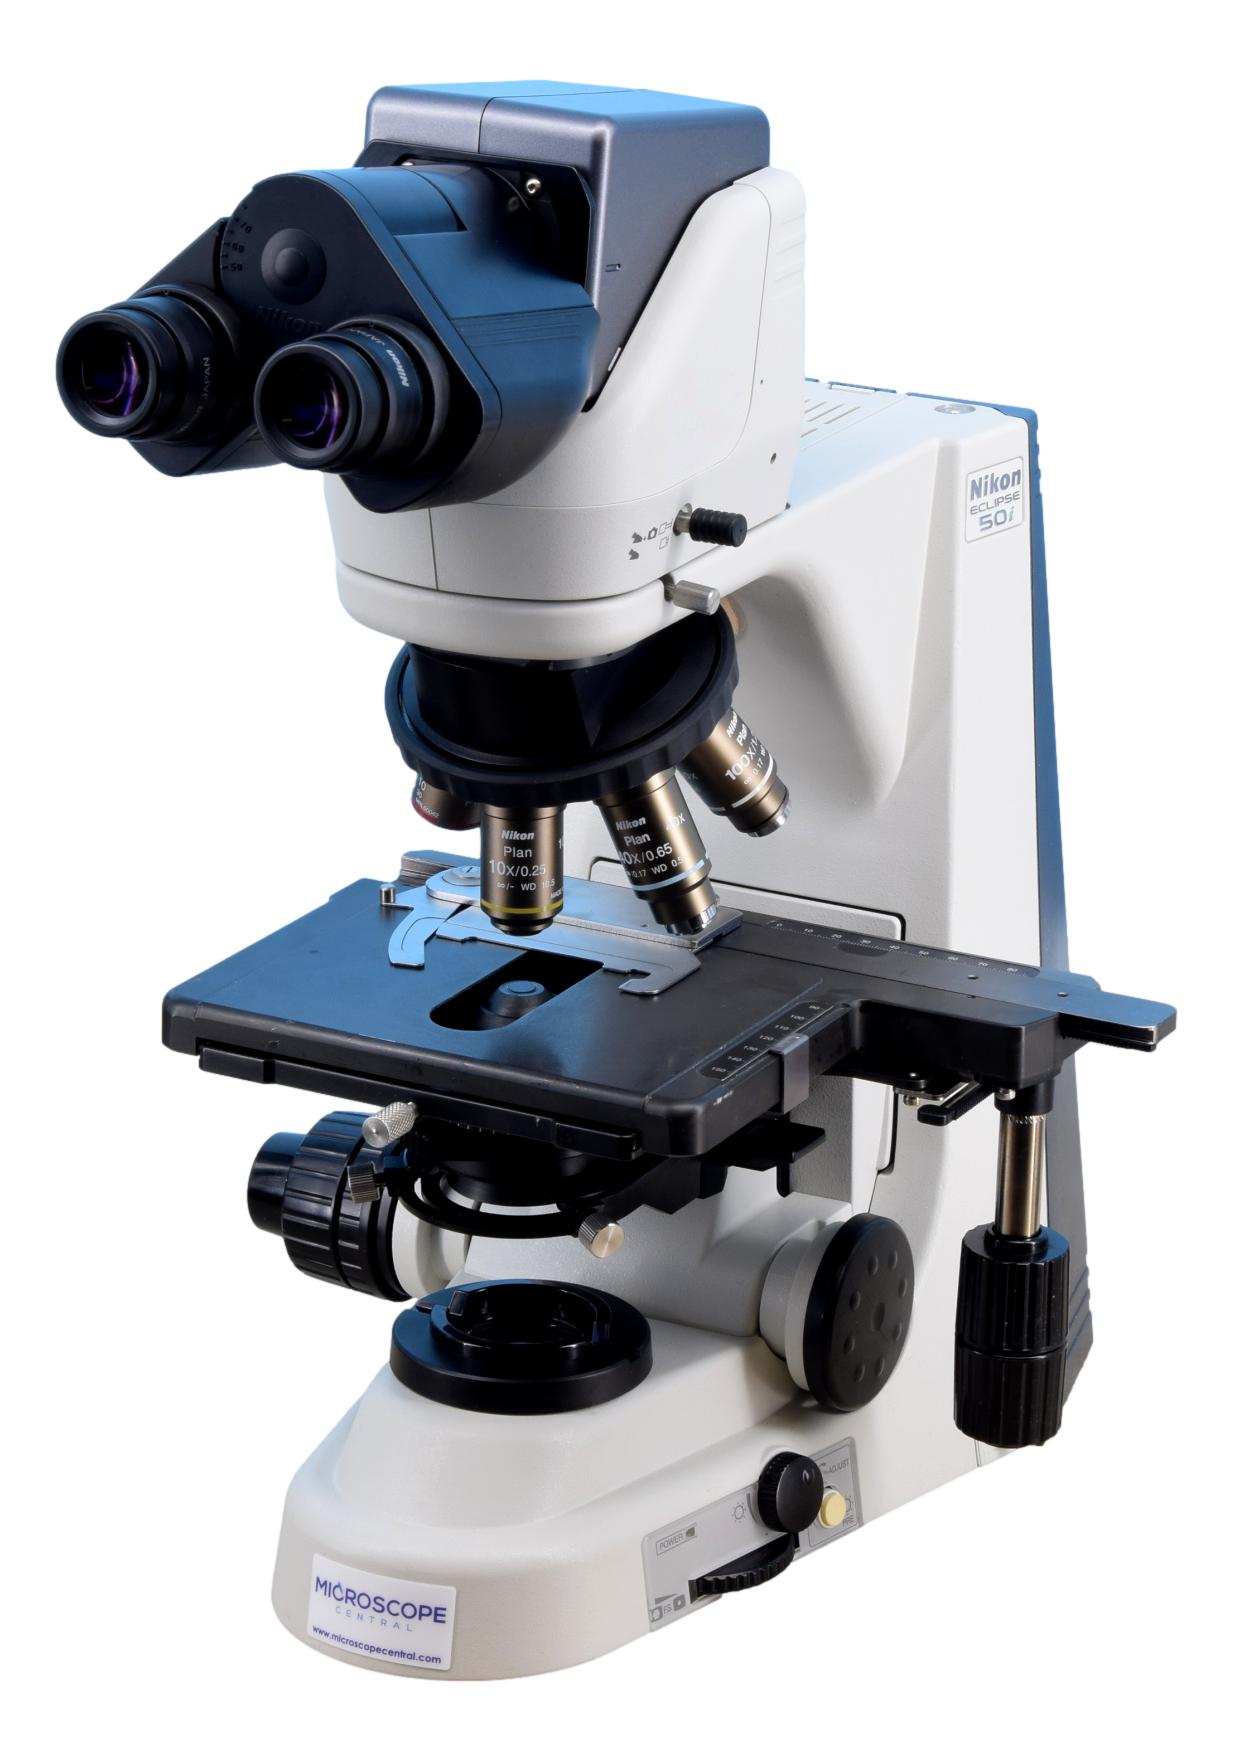 Nikon 50i Clinical Microscope - Ergonomic Binocular